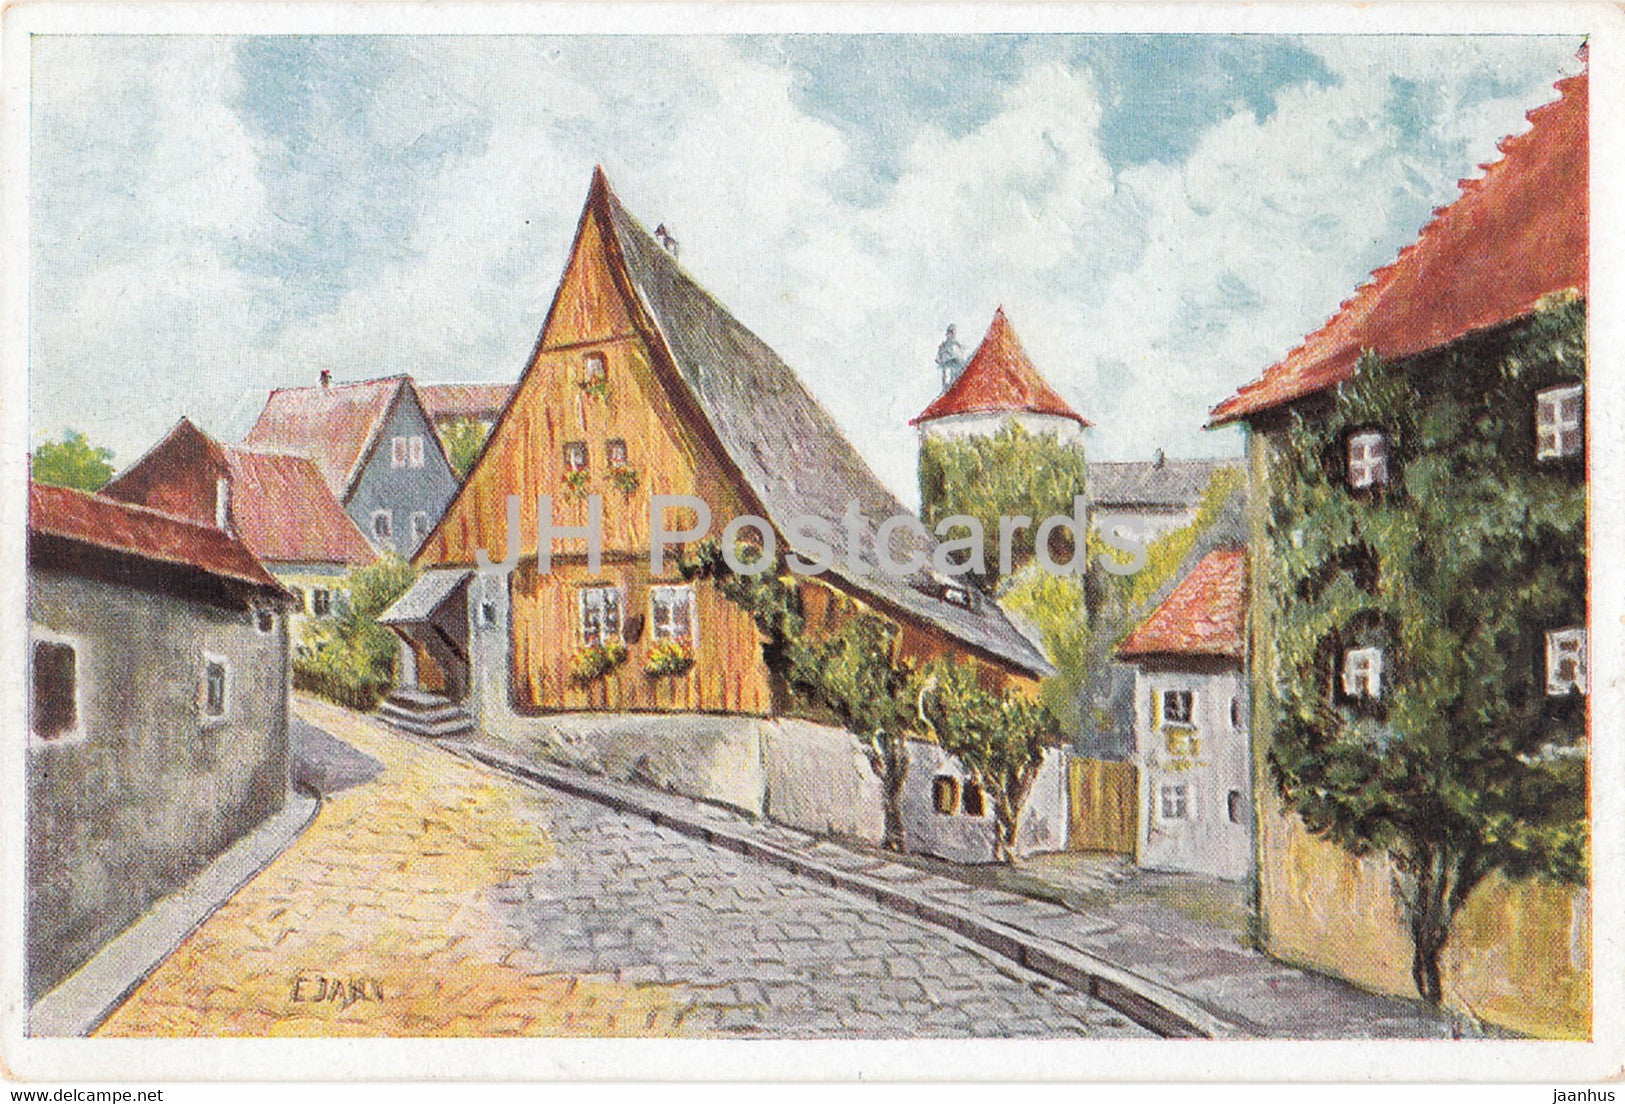 painting by E. Jahn - Strasse in Bautzen - 51481 - German art - Germany - unused - JH Postcards